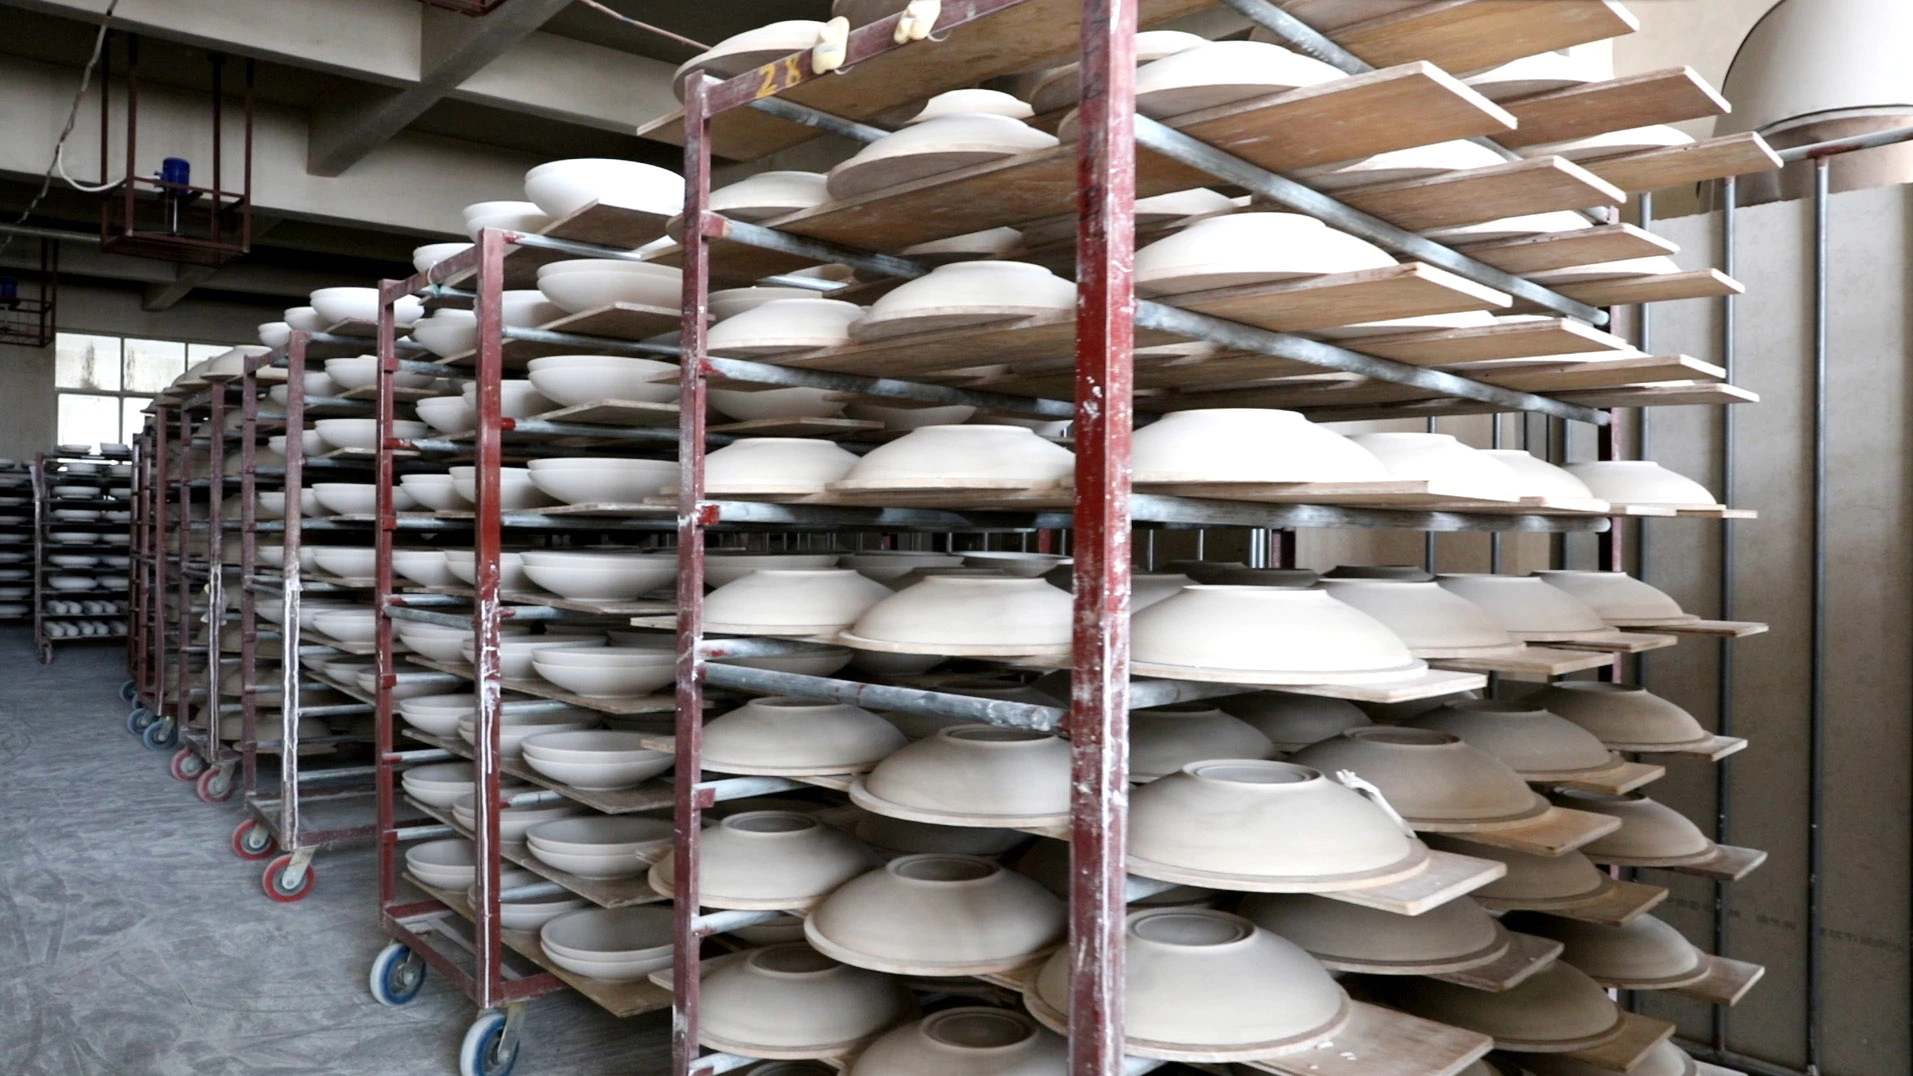 Ceramic factory second floor - drying room